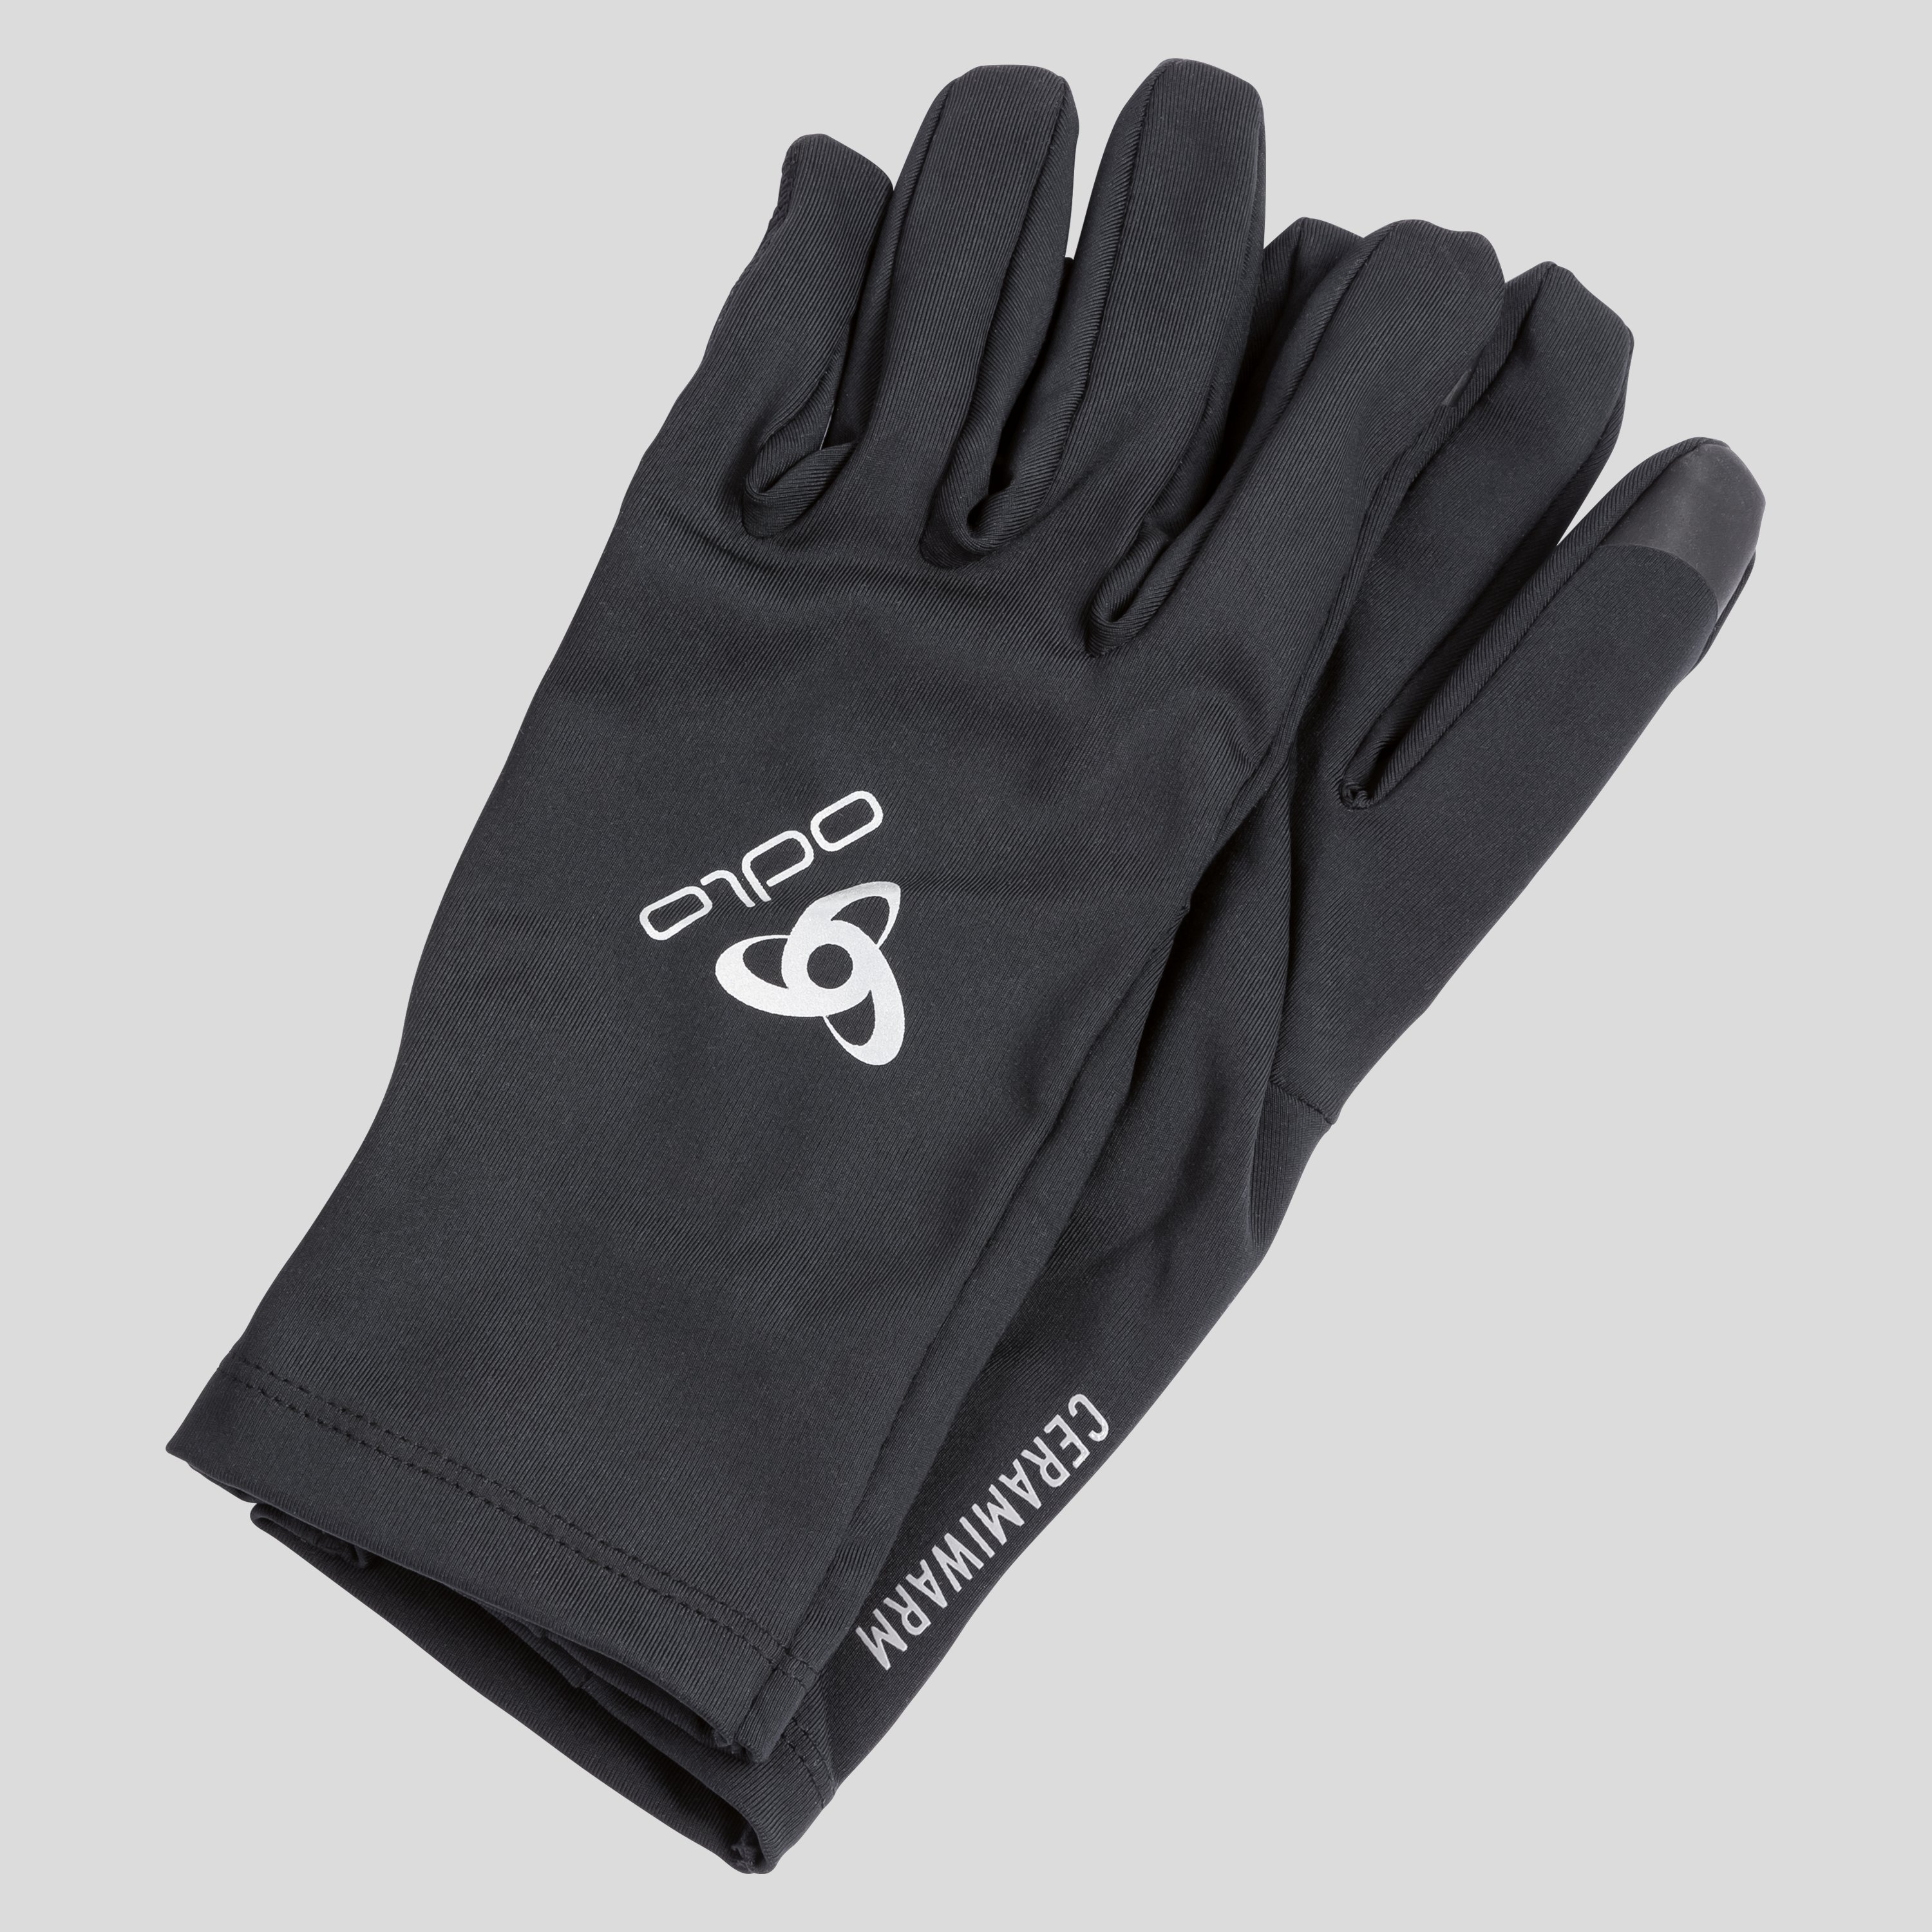 ODLO Ceramiwarm Light Handschuhe, S, schwarz